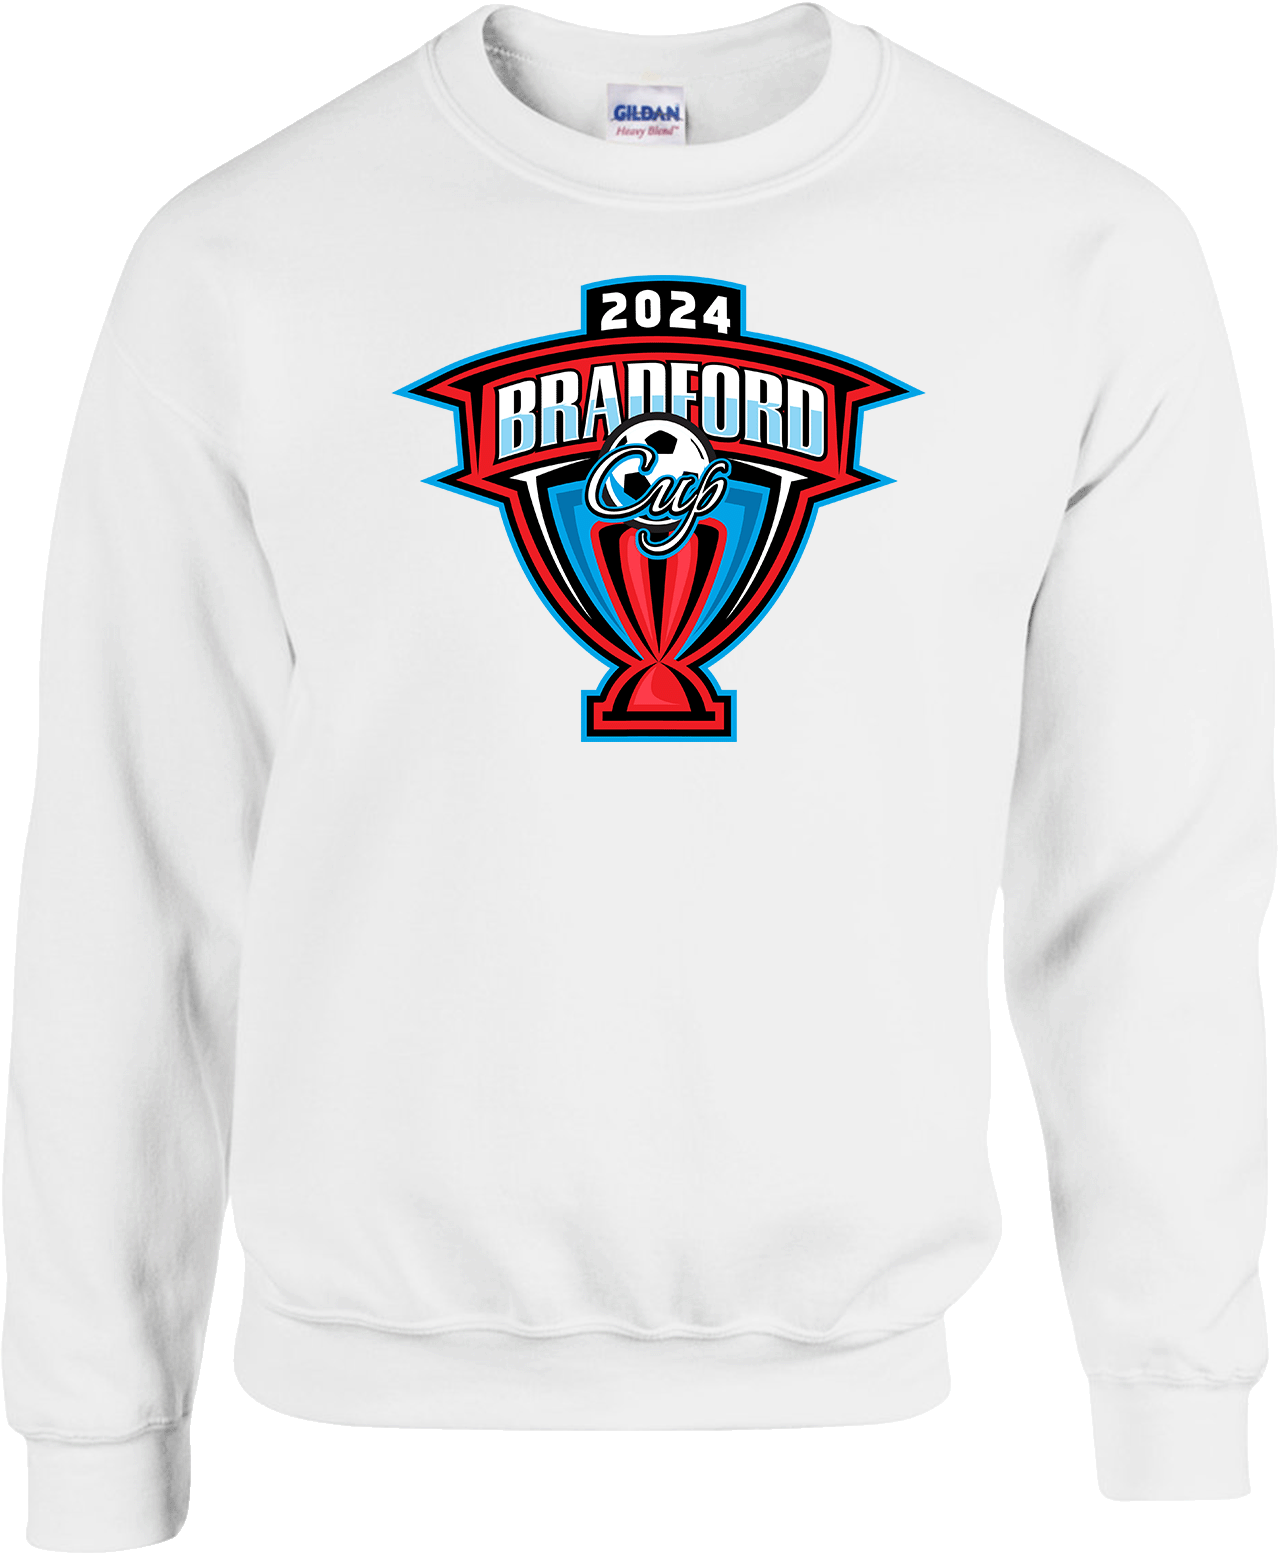 Crew Sweatershirt - 2024 Bradford Cup